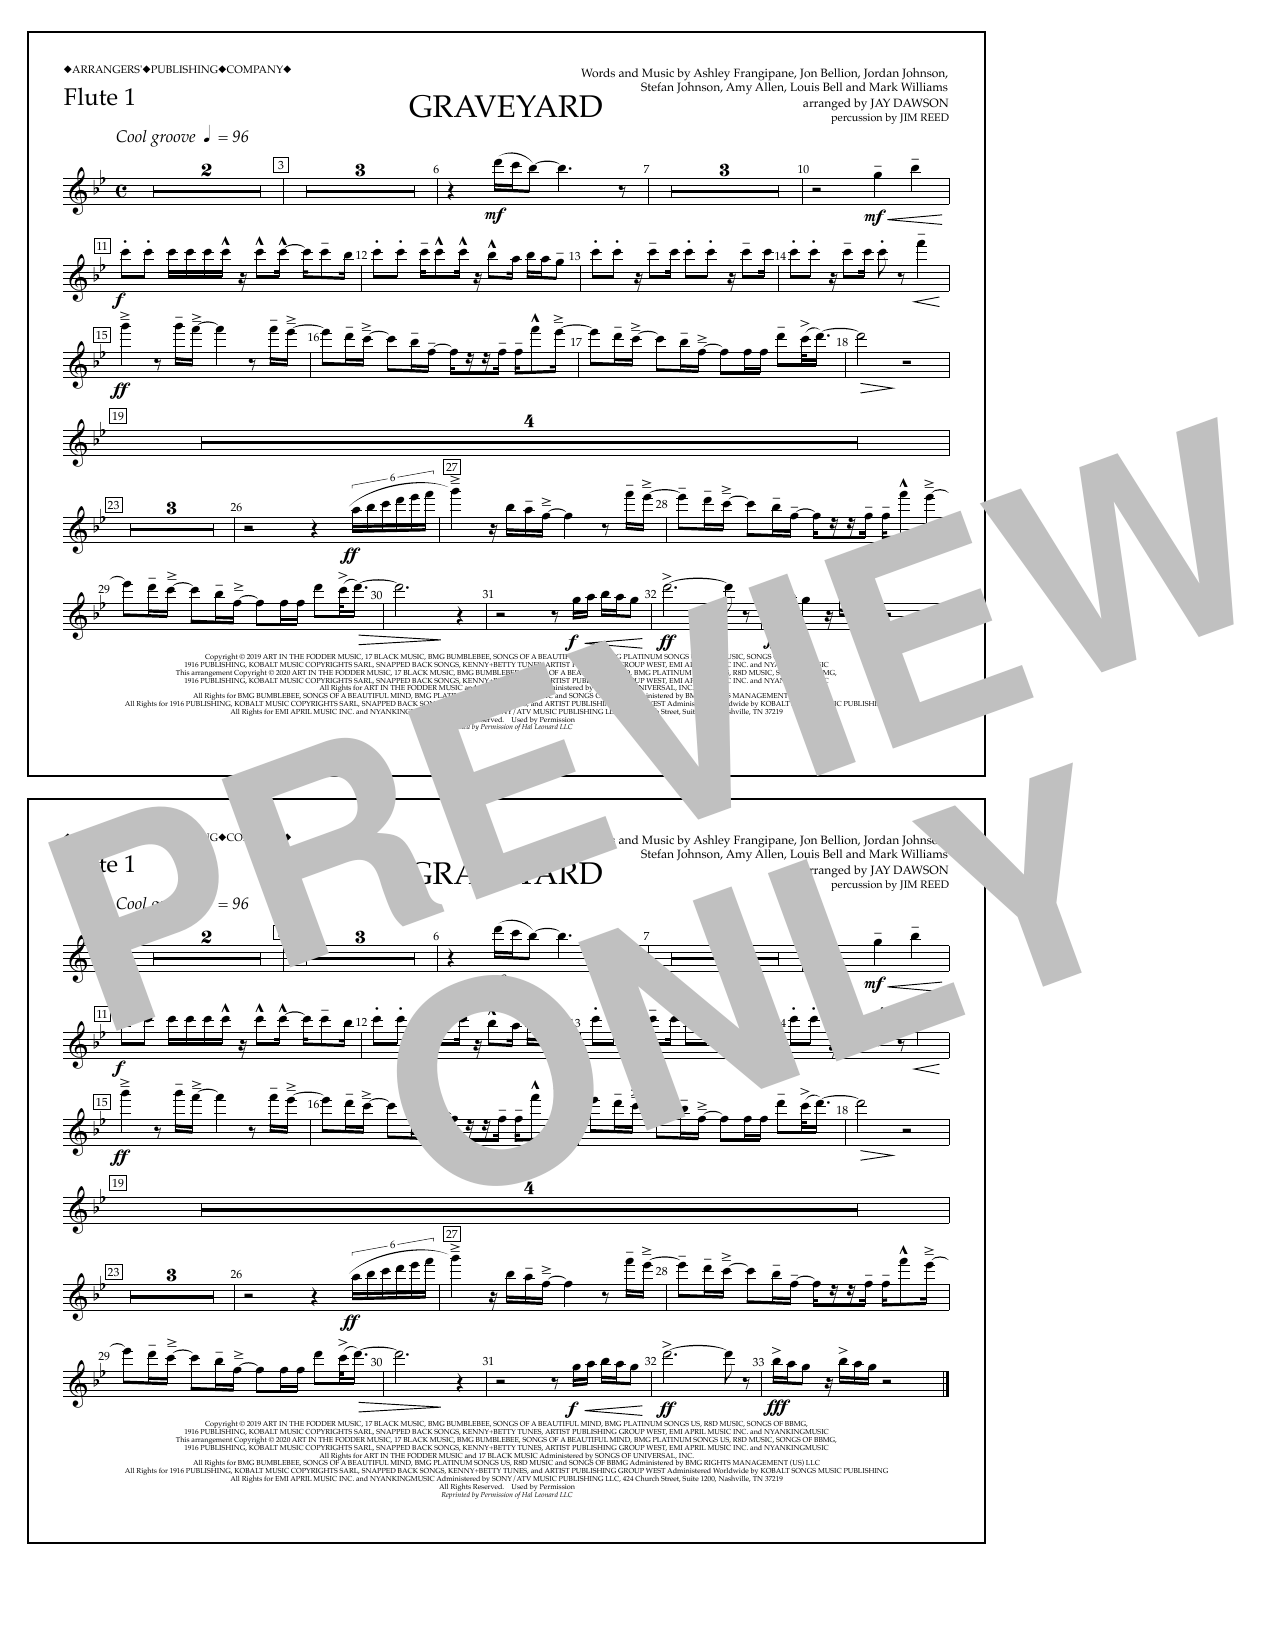 Download Halsey Graveyard (arr. Jay Dawson) - Flute 1 Sheet Music